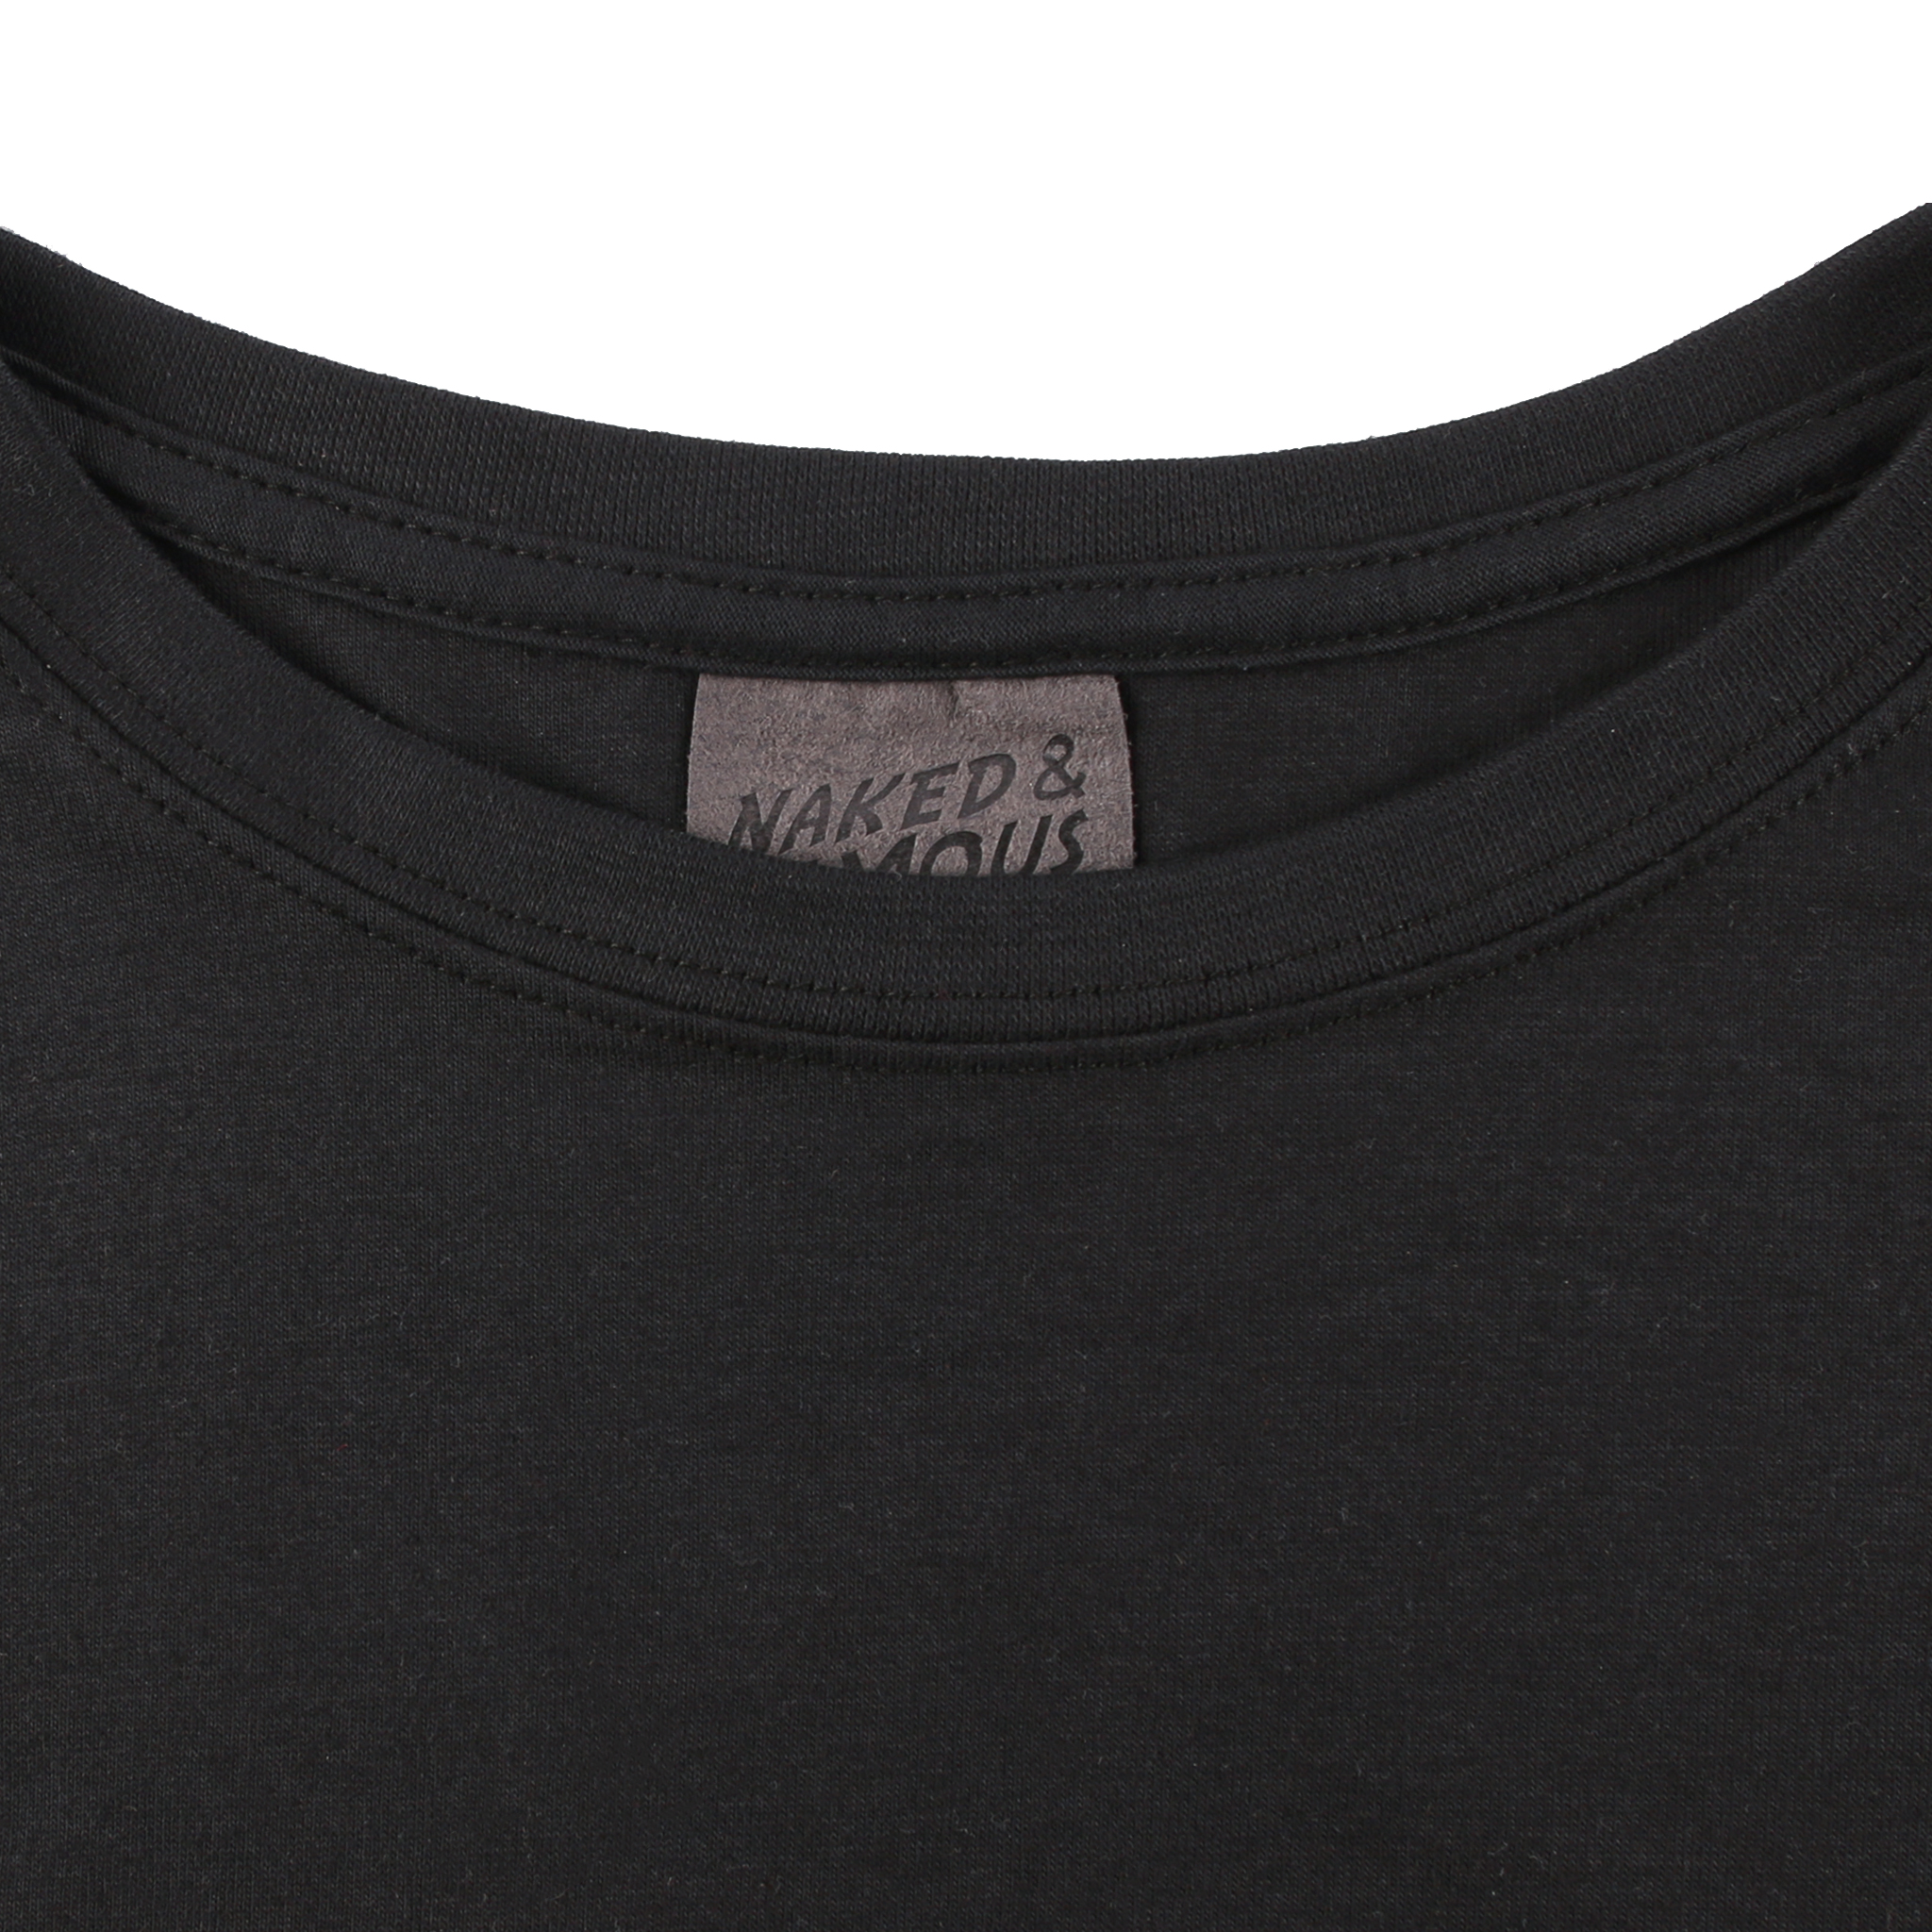  Women’s Circular Knit T-shirt Black Collar View 